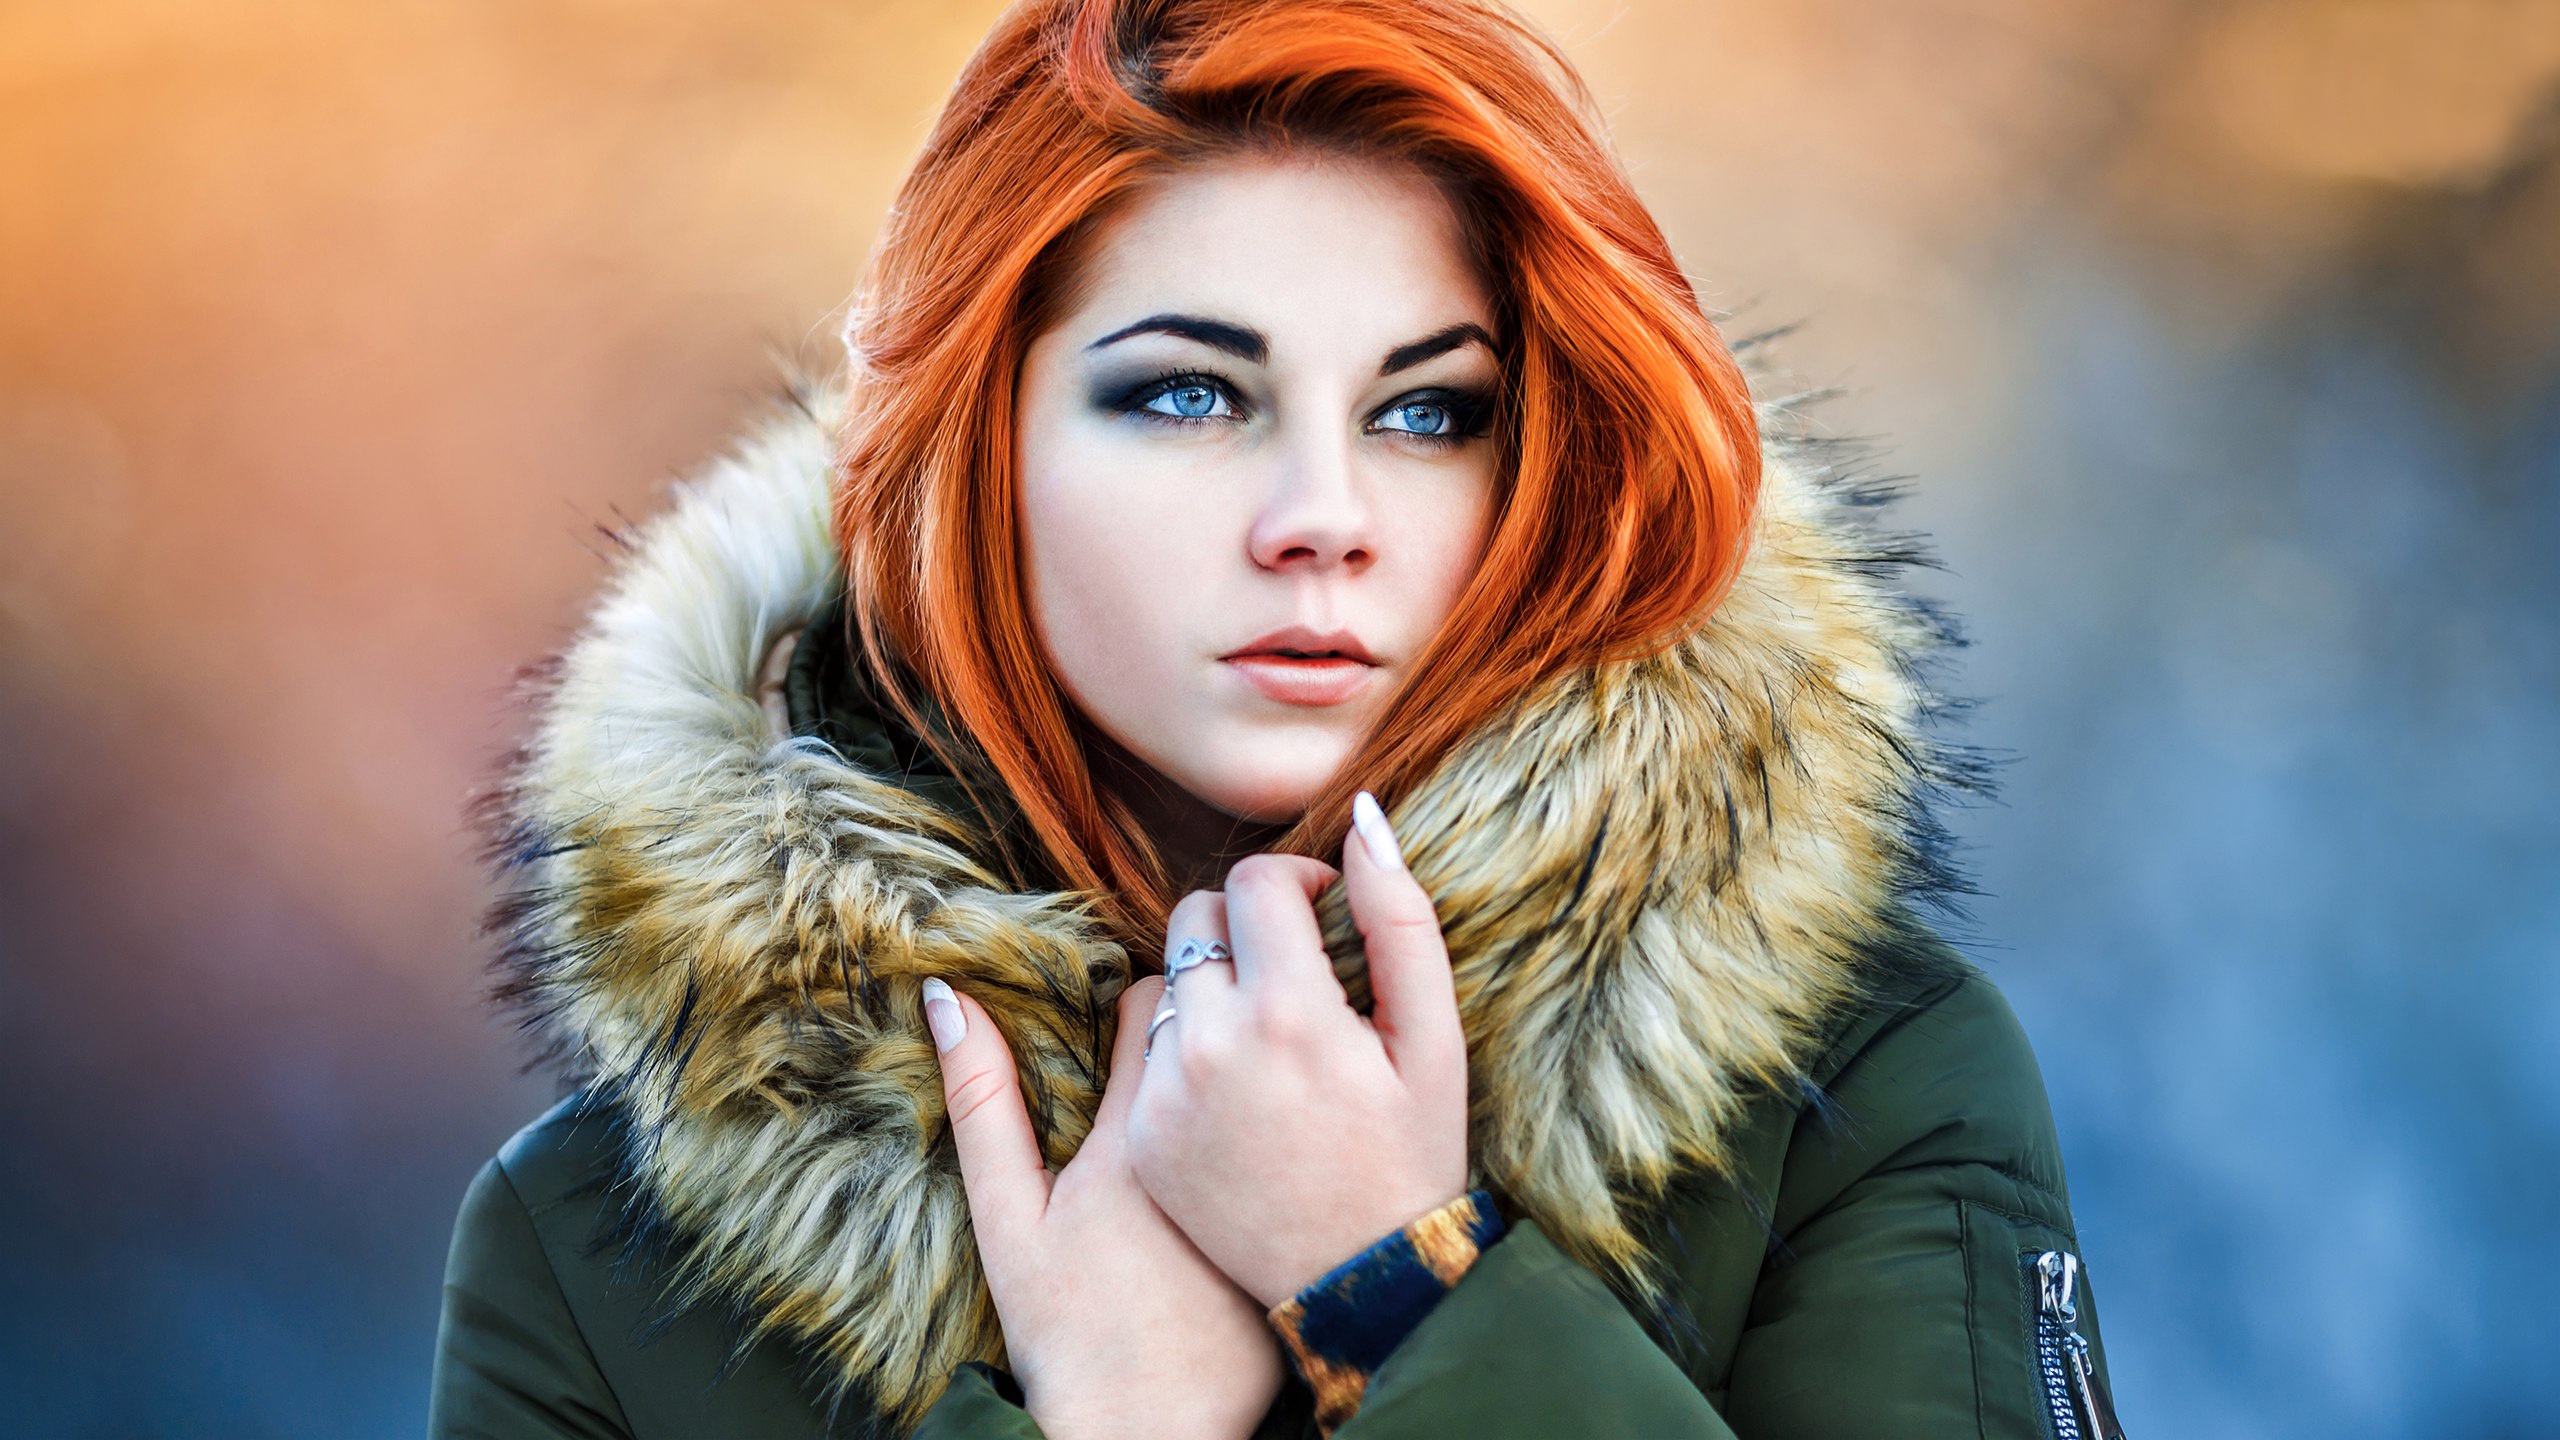 Women Model Redhead Depth Of Field Fur Green Jacket Jacket Looking Into The Distance Looking Away Bl 2560x1440